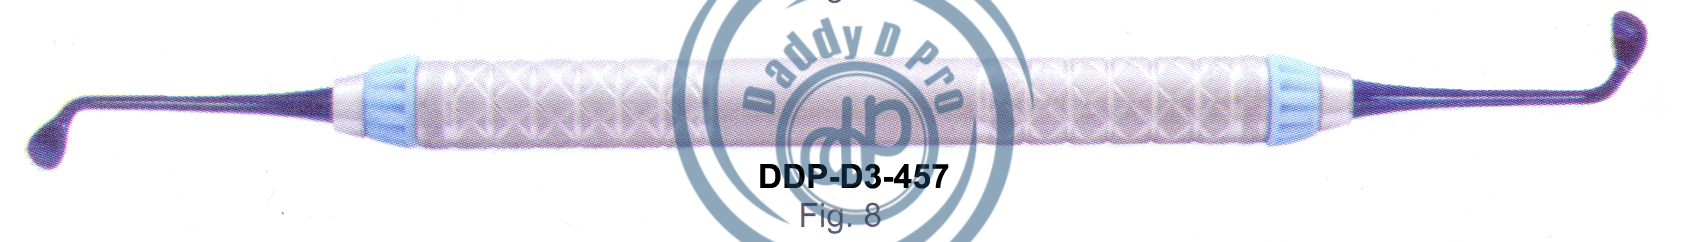 images/DDP-D3-457.png